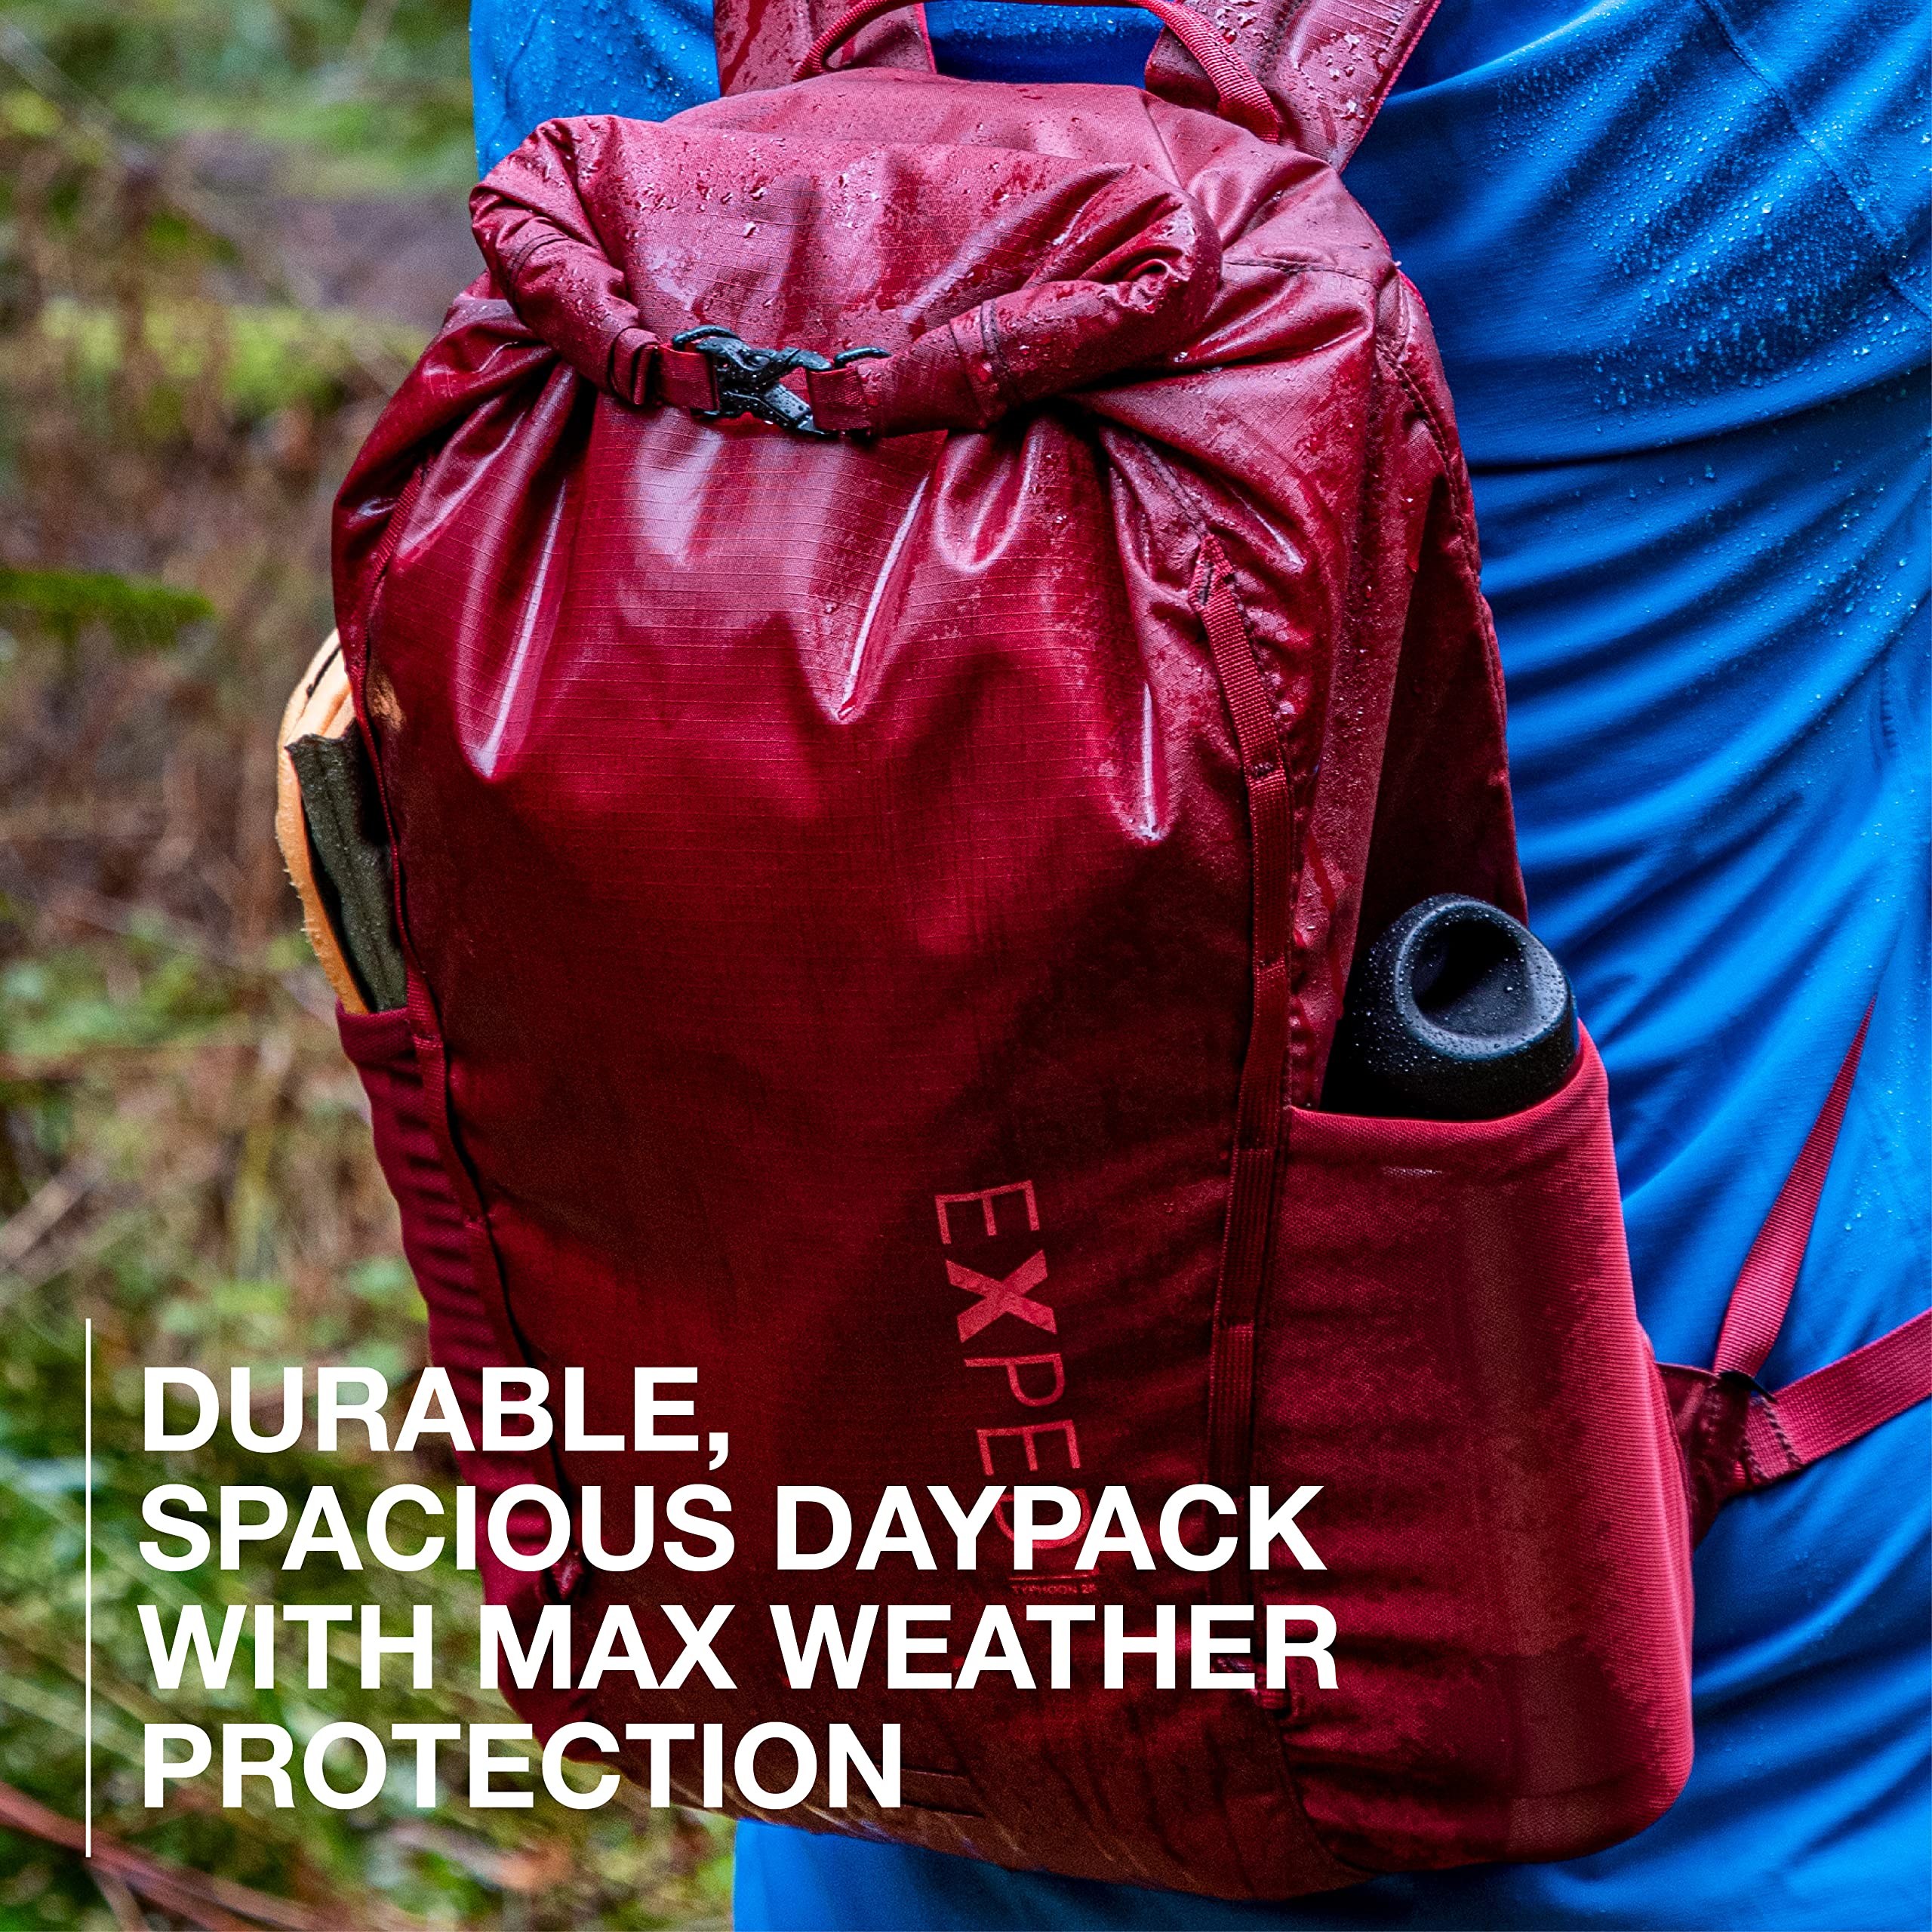 Exped Typhoon 25 | Lightweight Travel Backpack | Waterproof Backpack | Multifunctional Backpack, Black, 25L